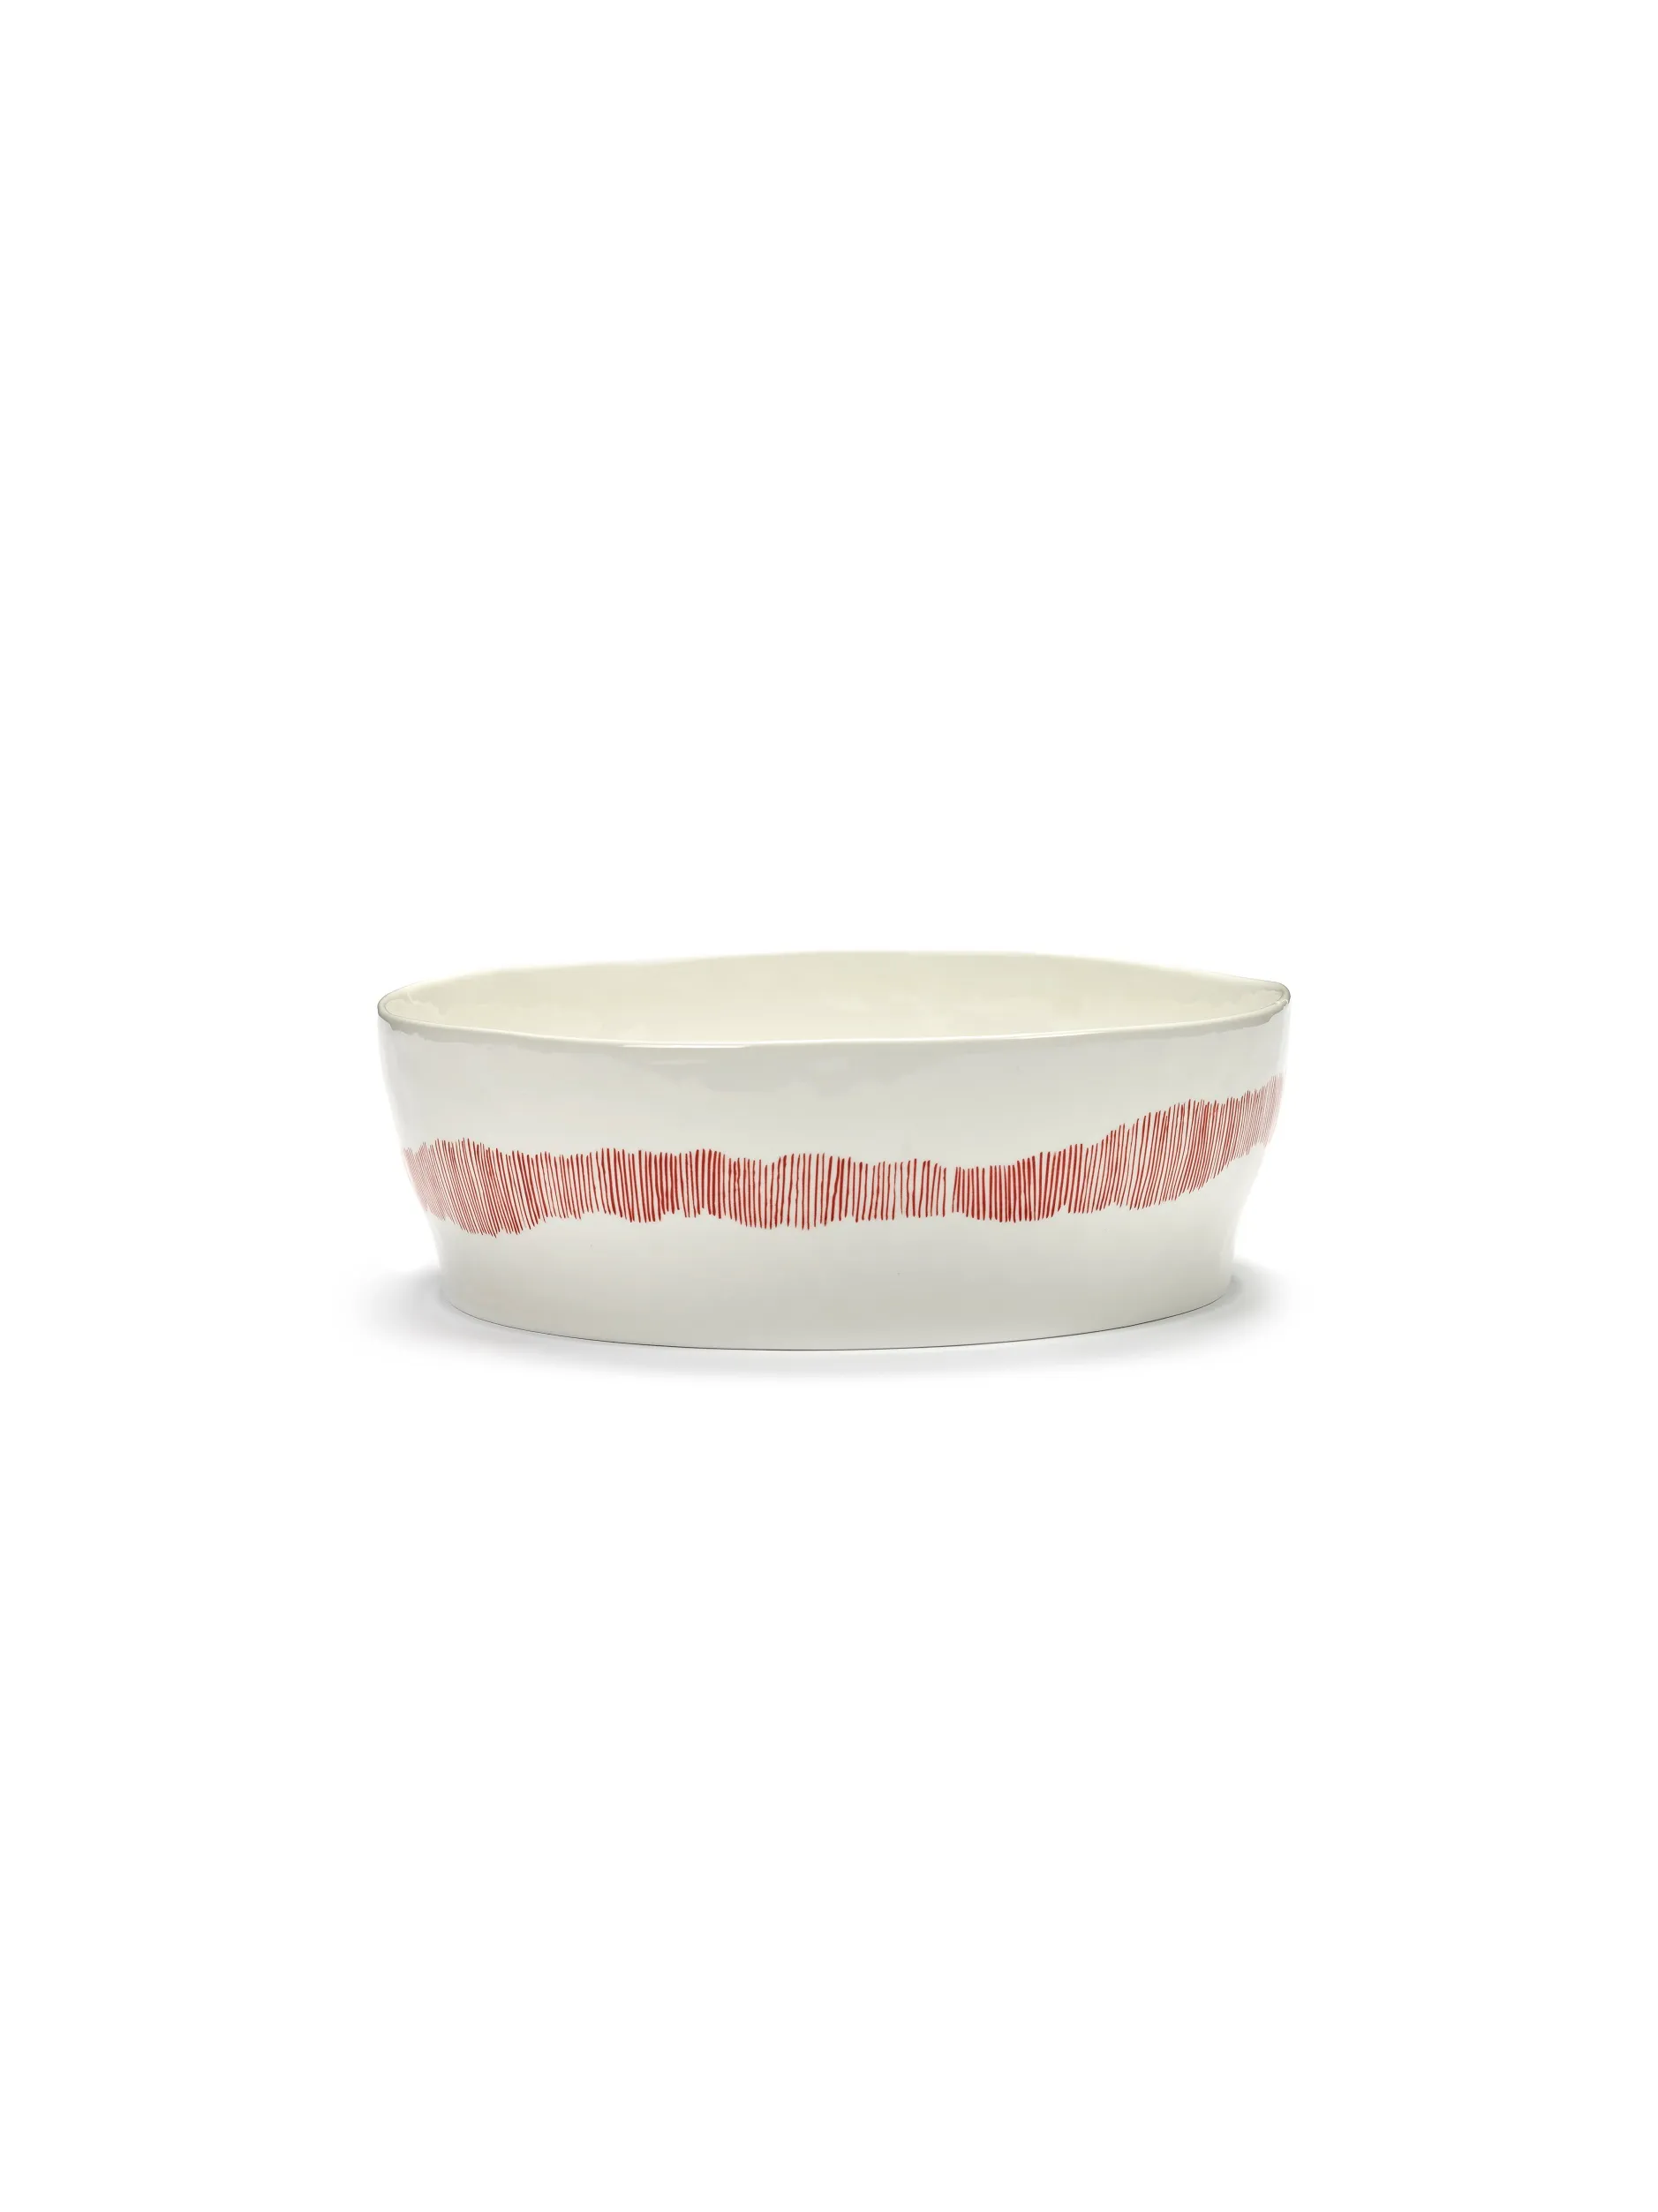 Salad Bowl White Swirl-Stripes Red Feast Ottolenghi by Serax L 28.5 W 28.5 H 9.5 CM